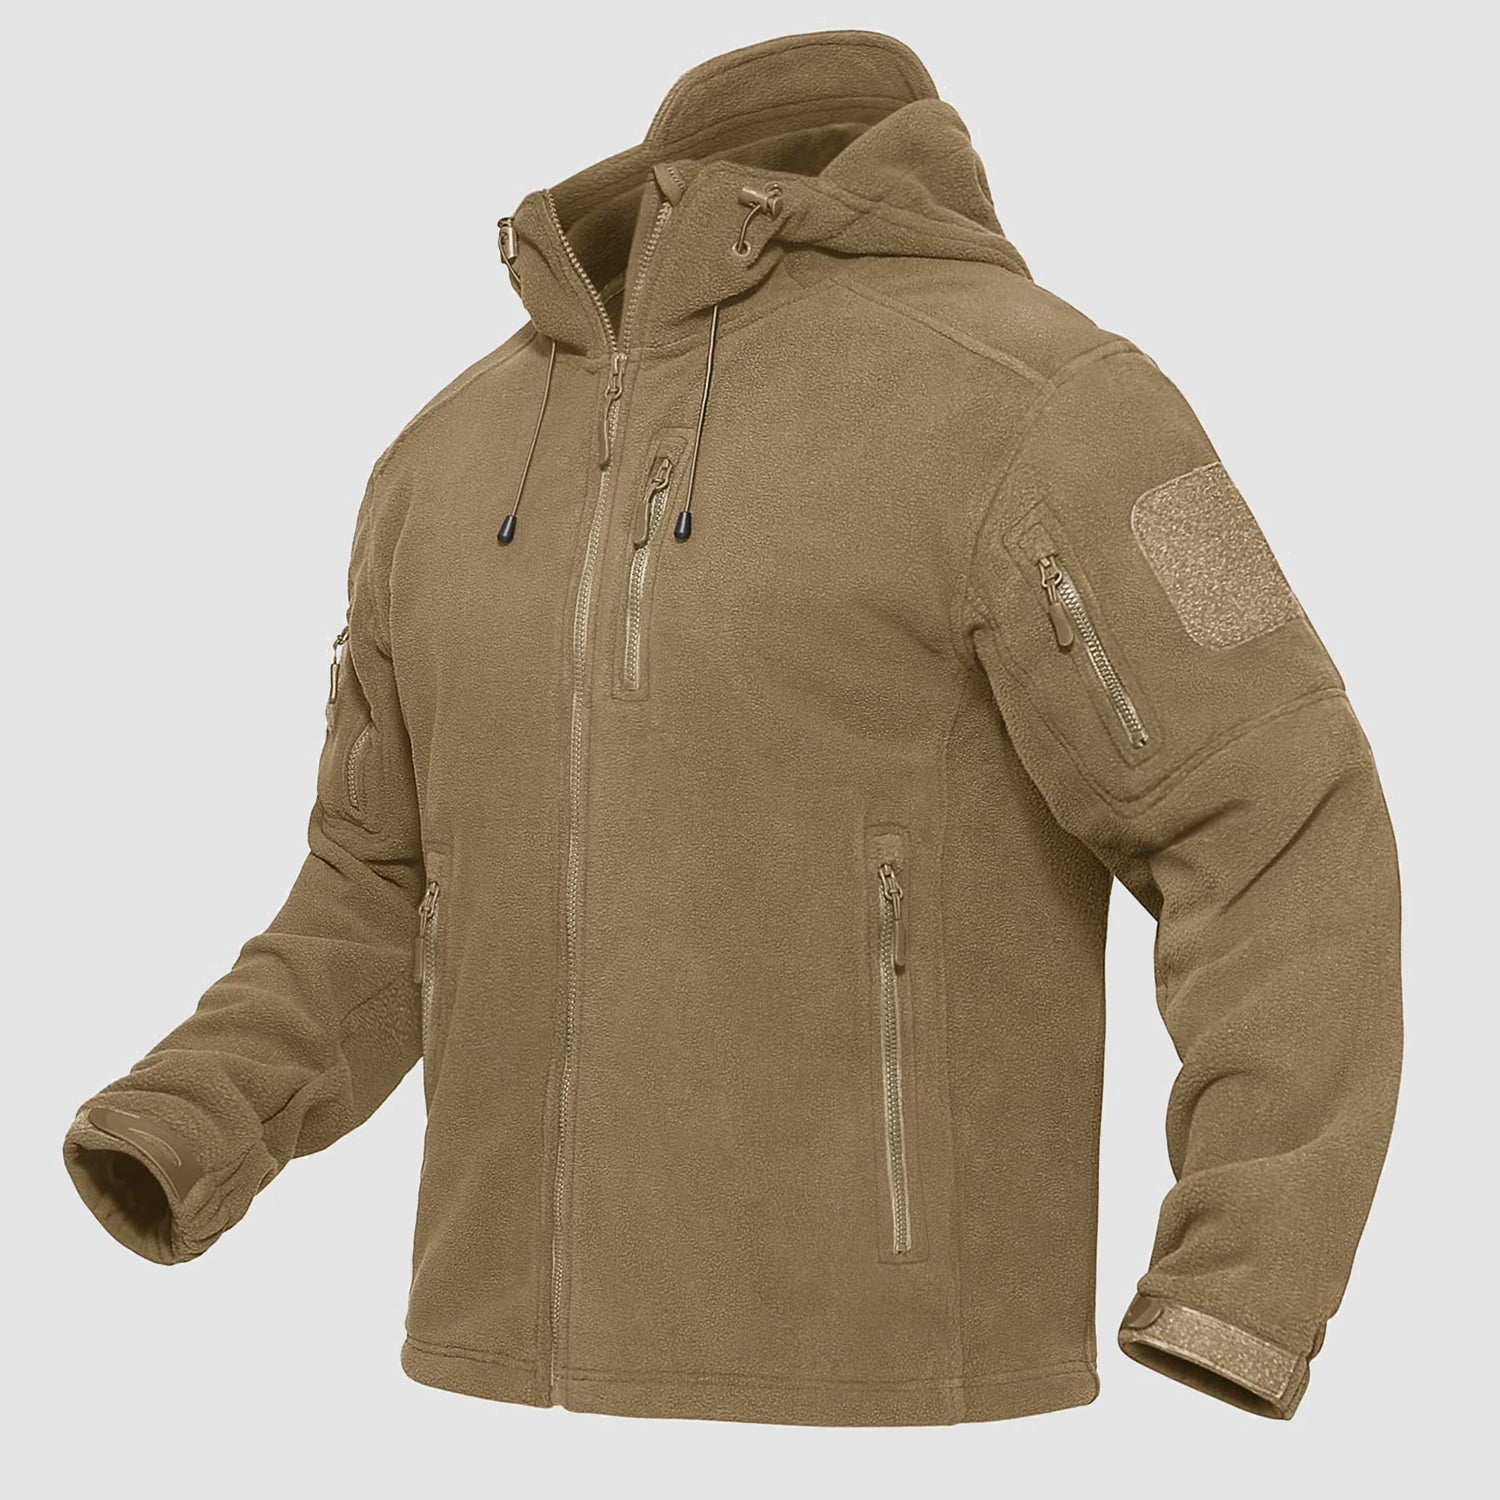 MAGCOMSEN Men's Tactical Jacket 7 Pockets Performance Fleece Lined